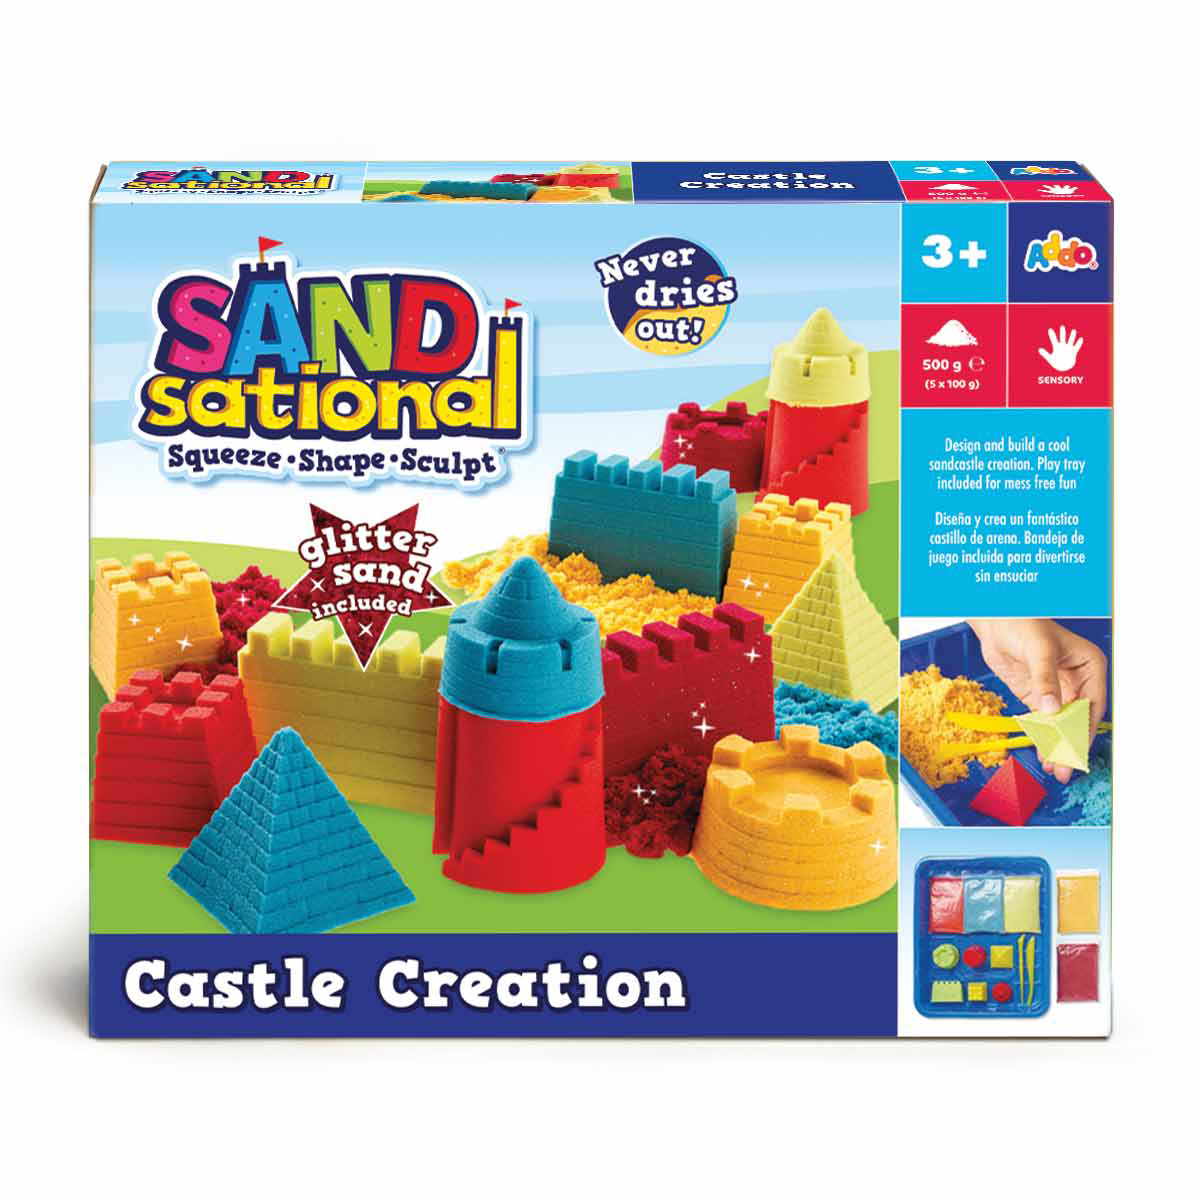 sand satitional castle creation